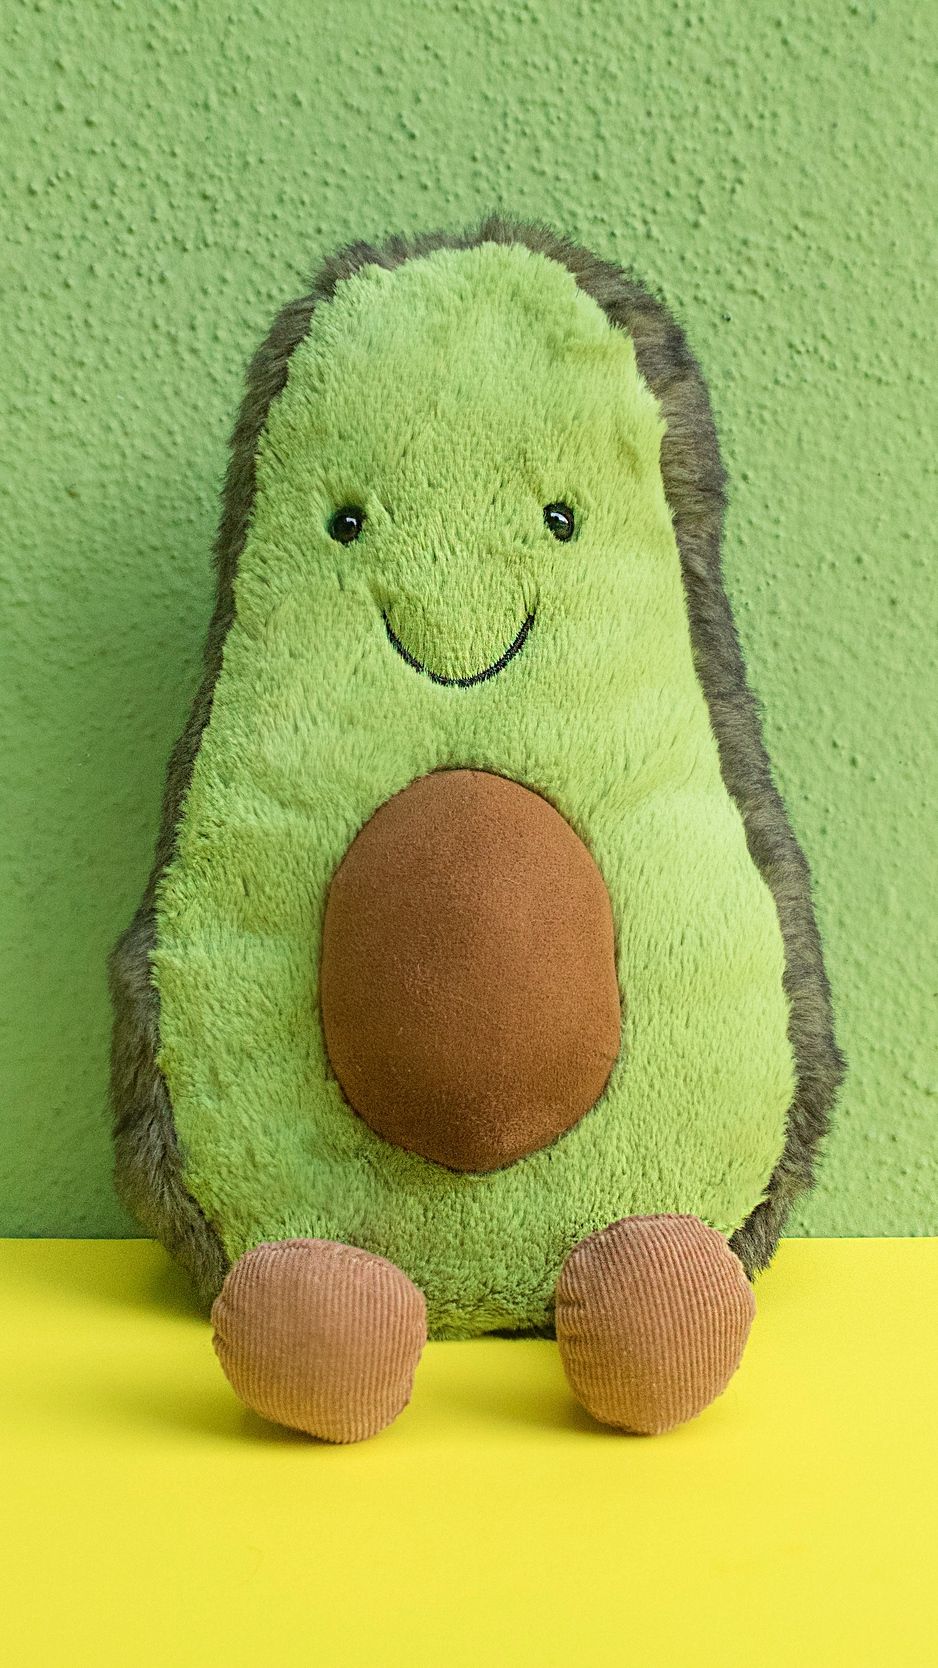 Download wallpaper 938x1668 toy, teddy, avocado, cute, green